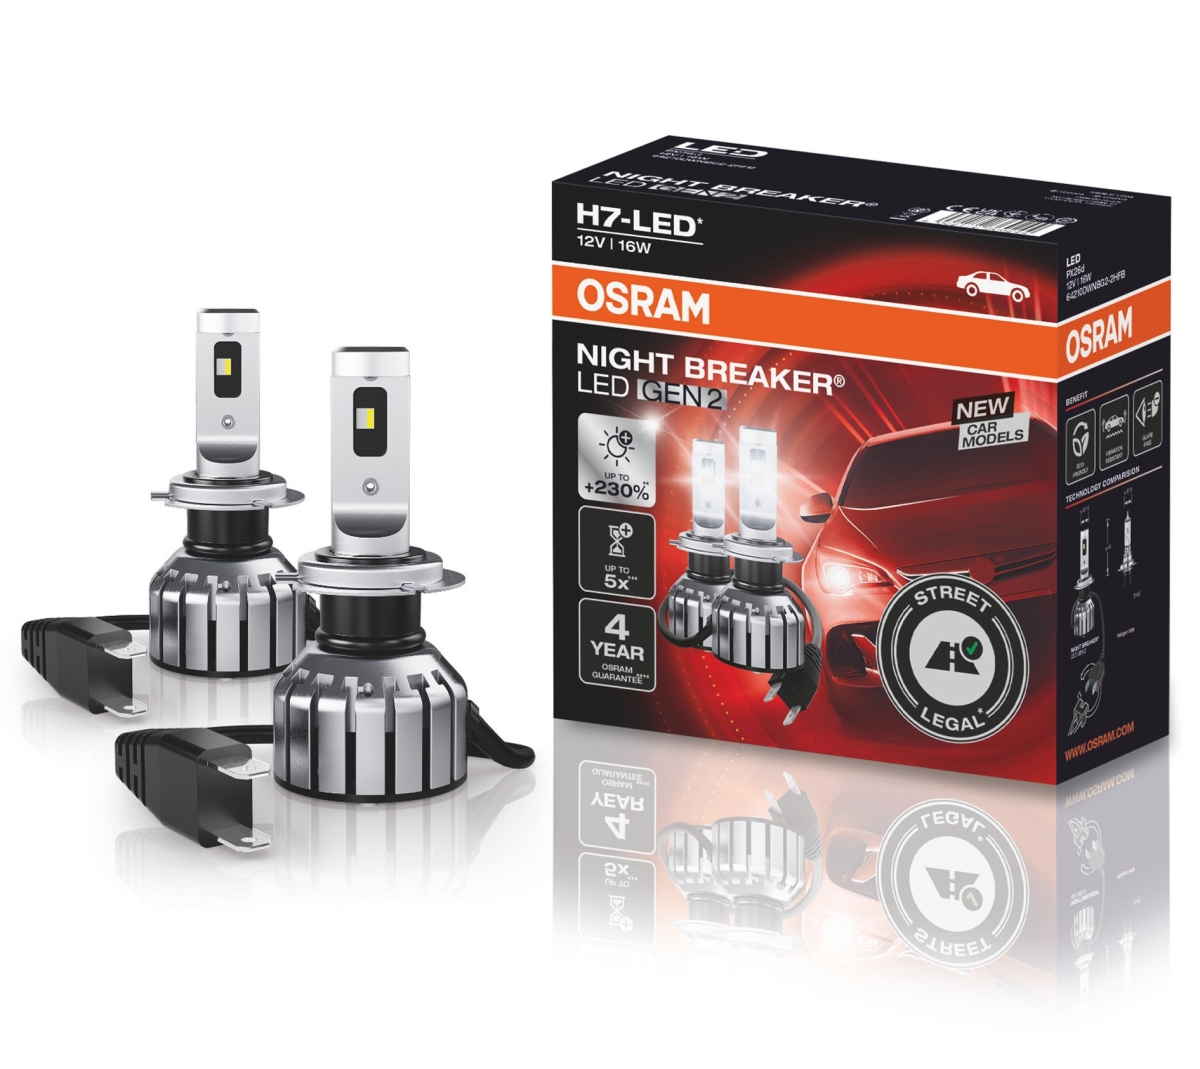 OSRAM NIGHT BREAKER LED Gen 2 H7 Set 230% für Audi A1 8X Bj 2015-2018